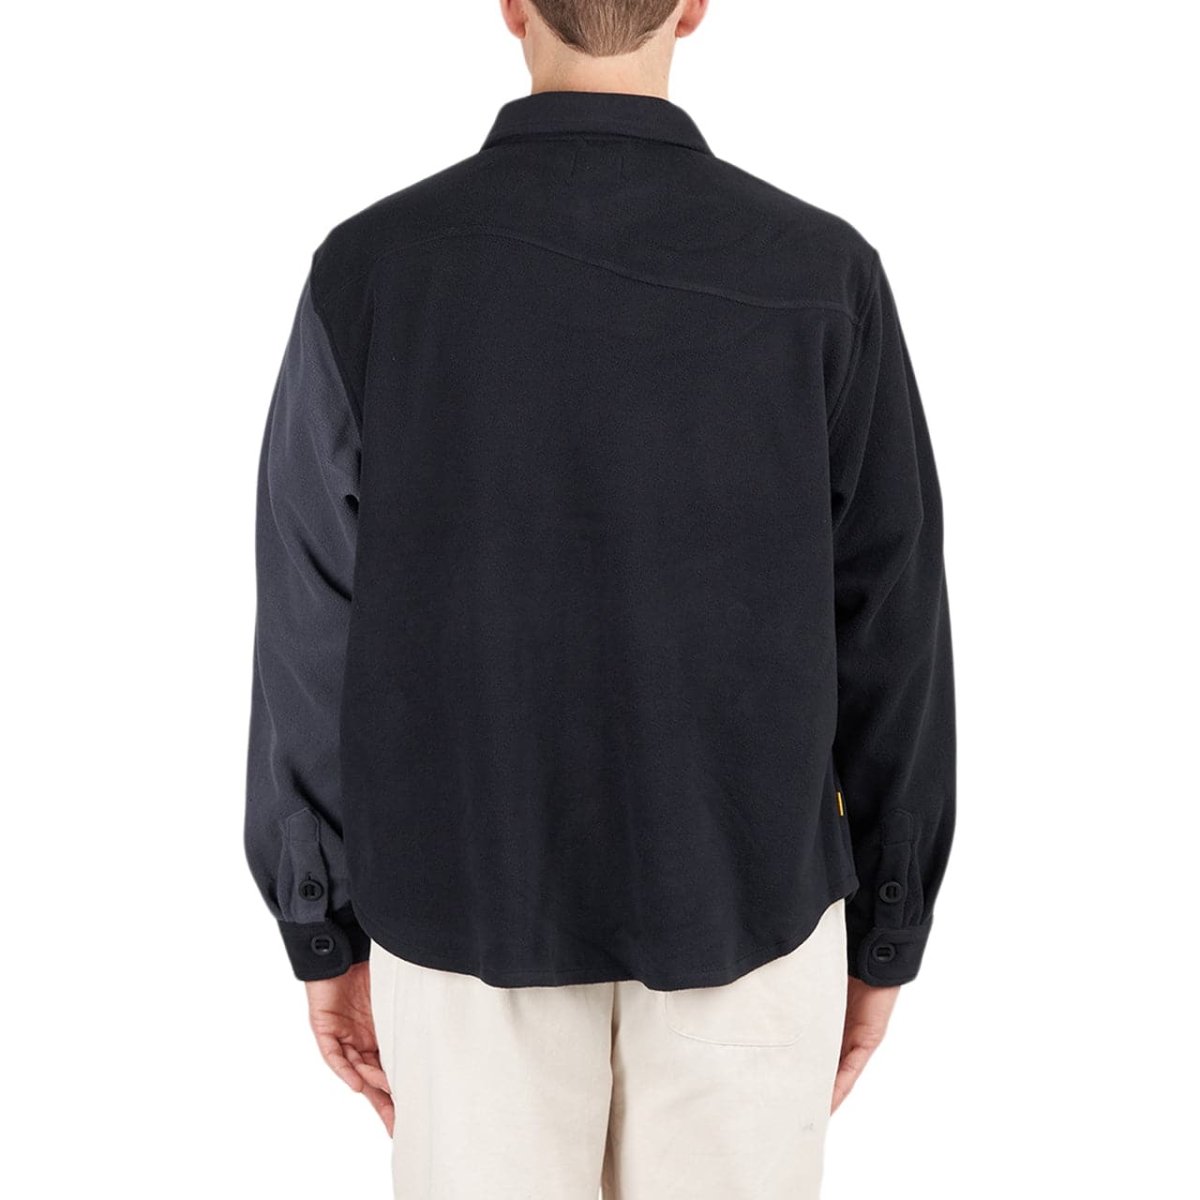 Dime Polar Fleece Button Up Shirt (Schwarz)  - Allike Store